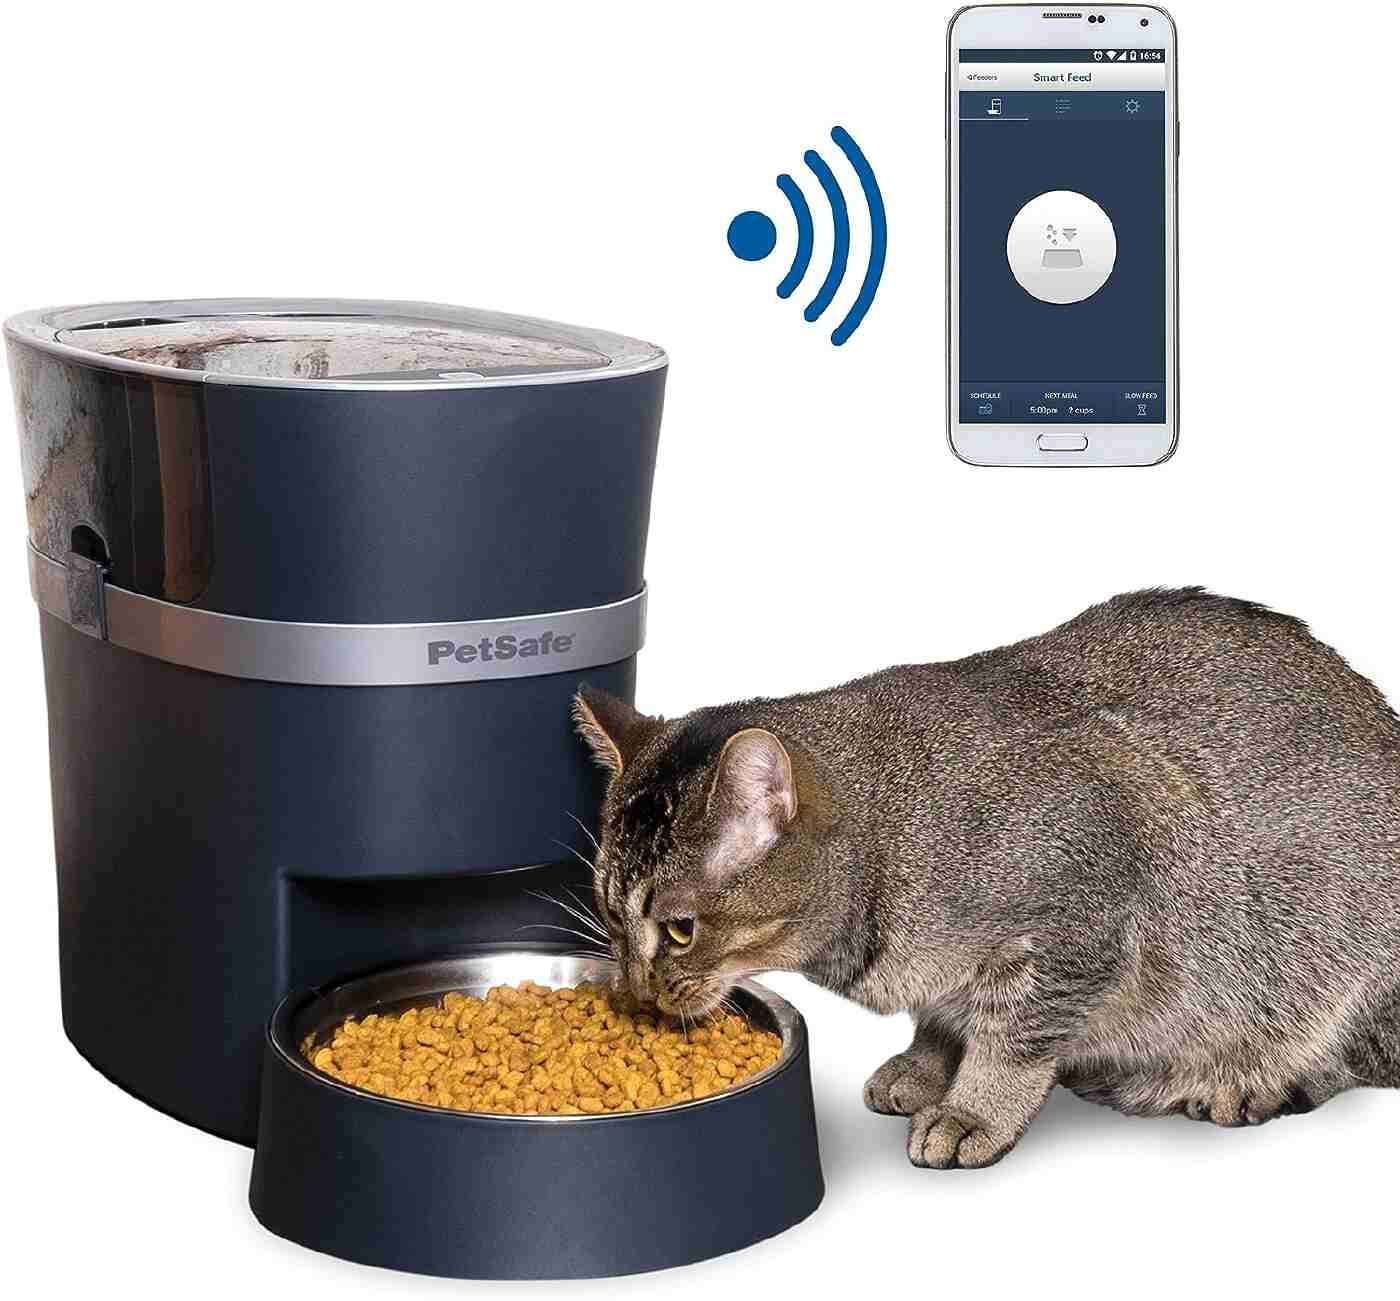 PetSafe Smart Feed